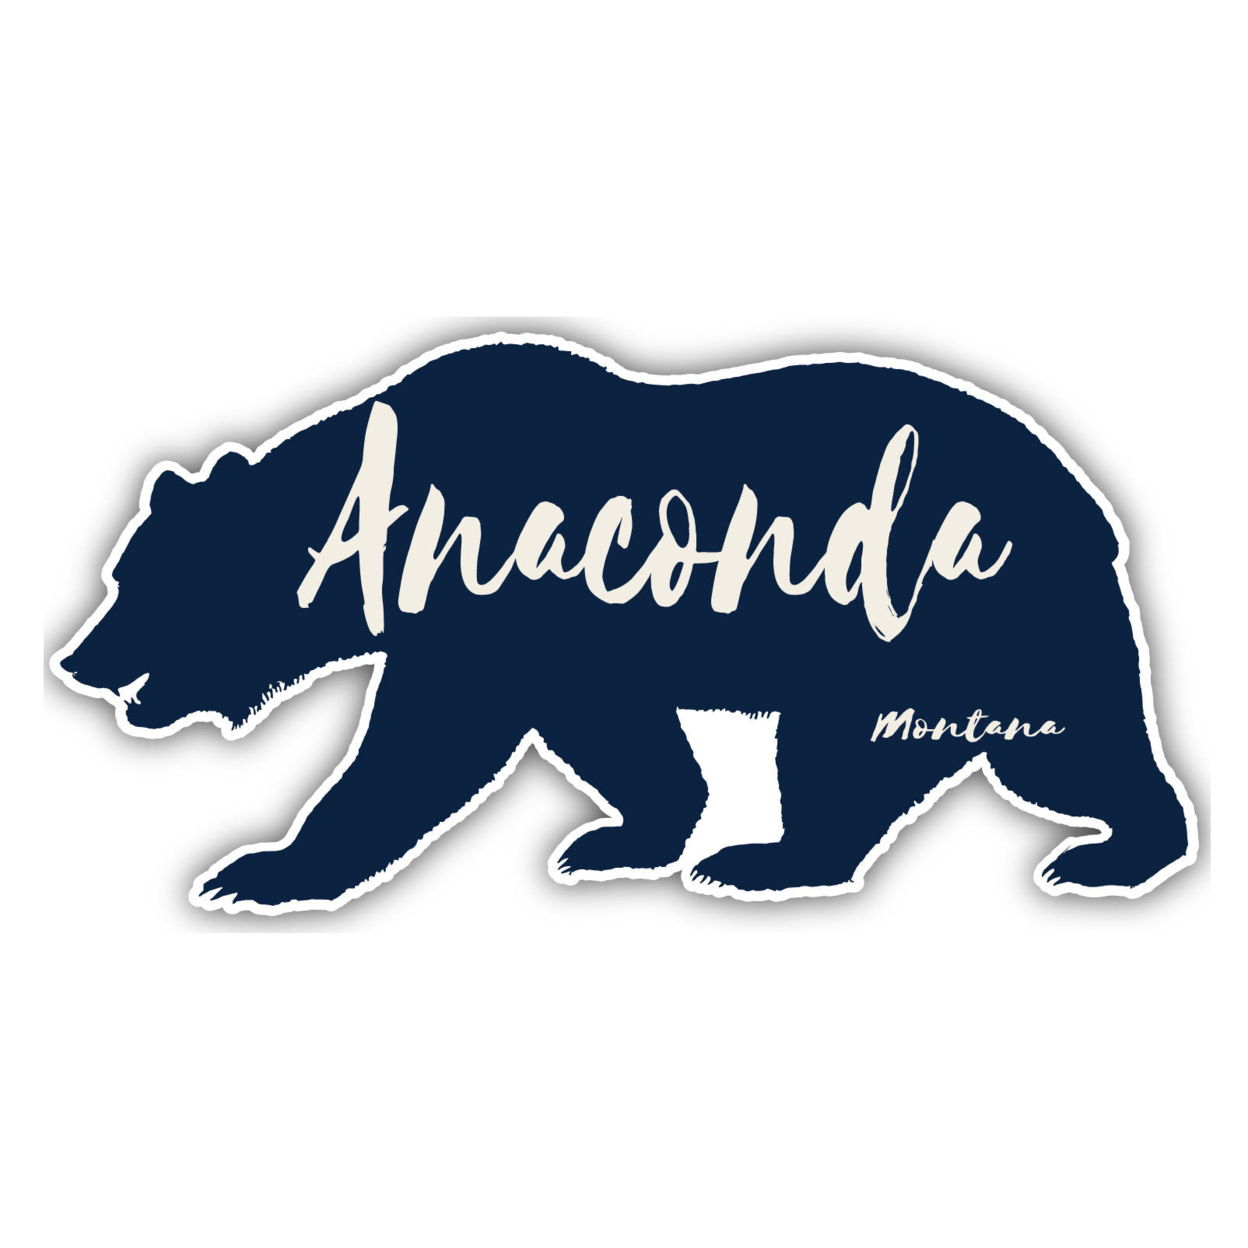 Anaconda Montana Souvenir Decorative Stickers (Choose Theme And Size) - Single Unit, 12-Inch, Bear